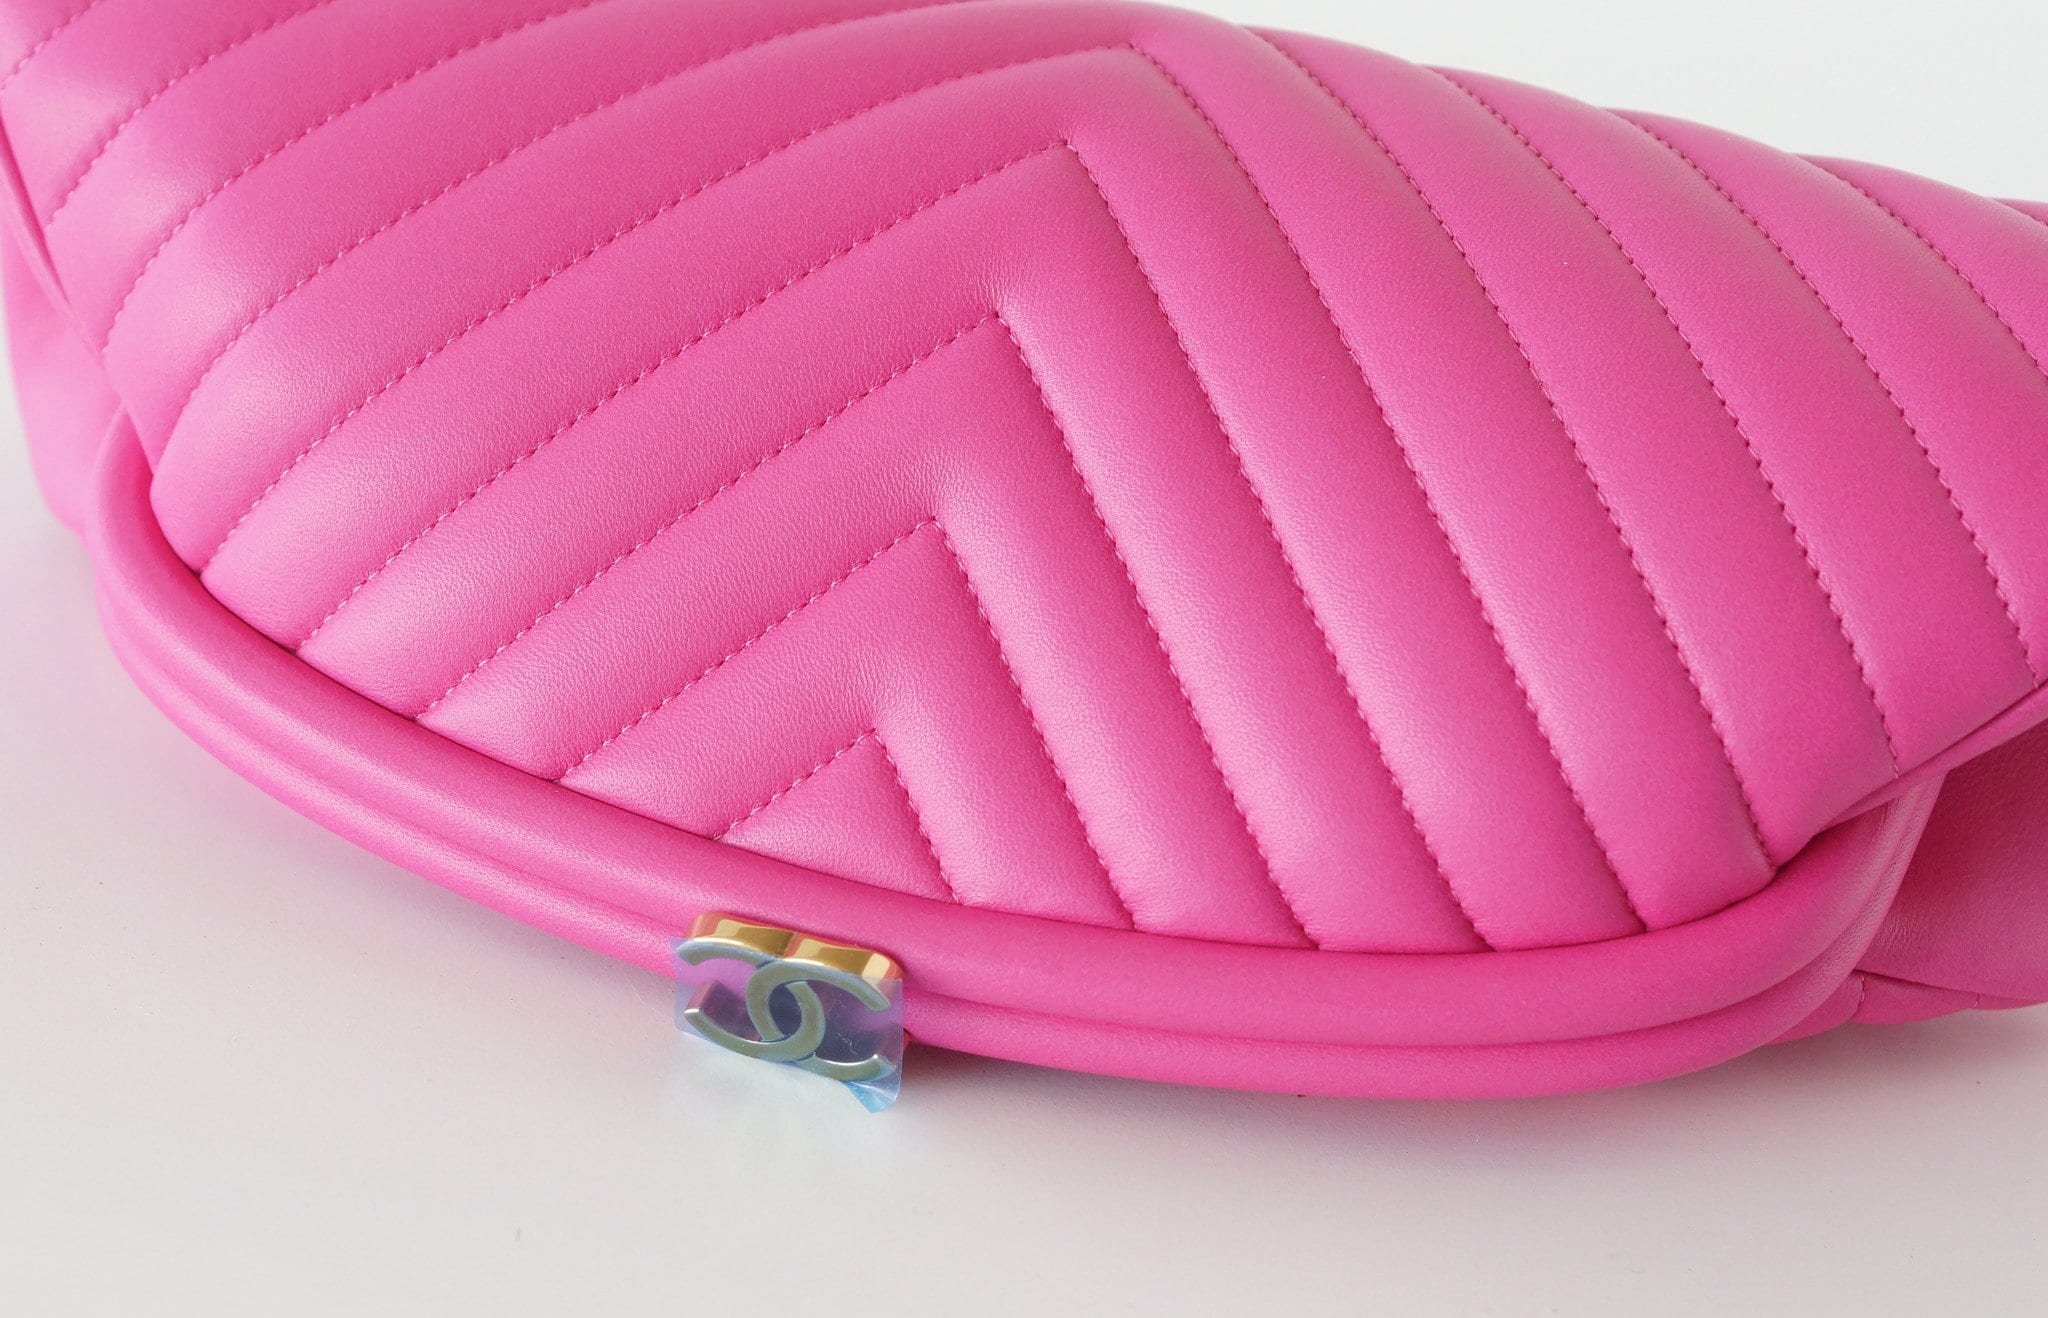 Chanel Bag Rare Pink Chevron Lambskin Clutch new - mightychic